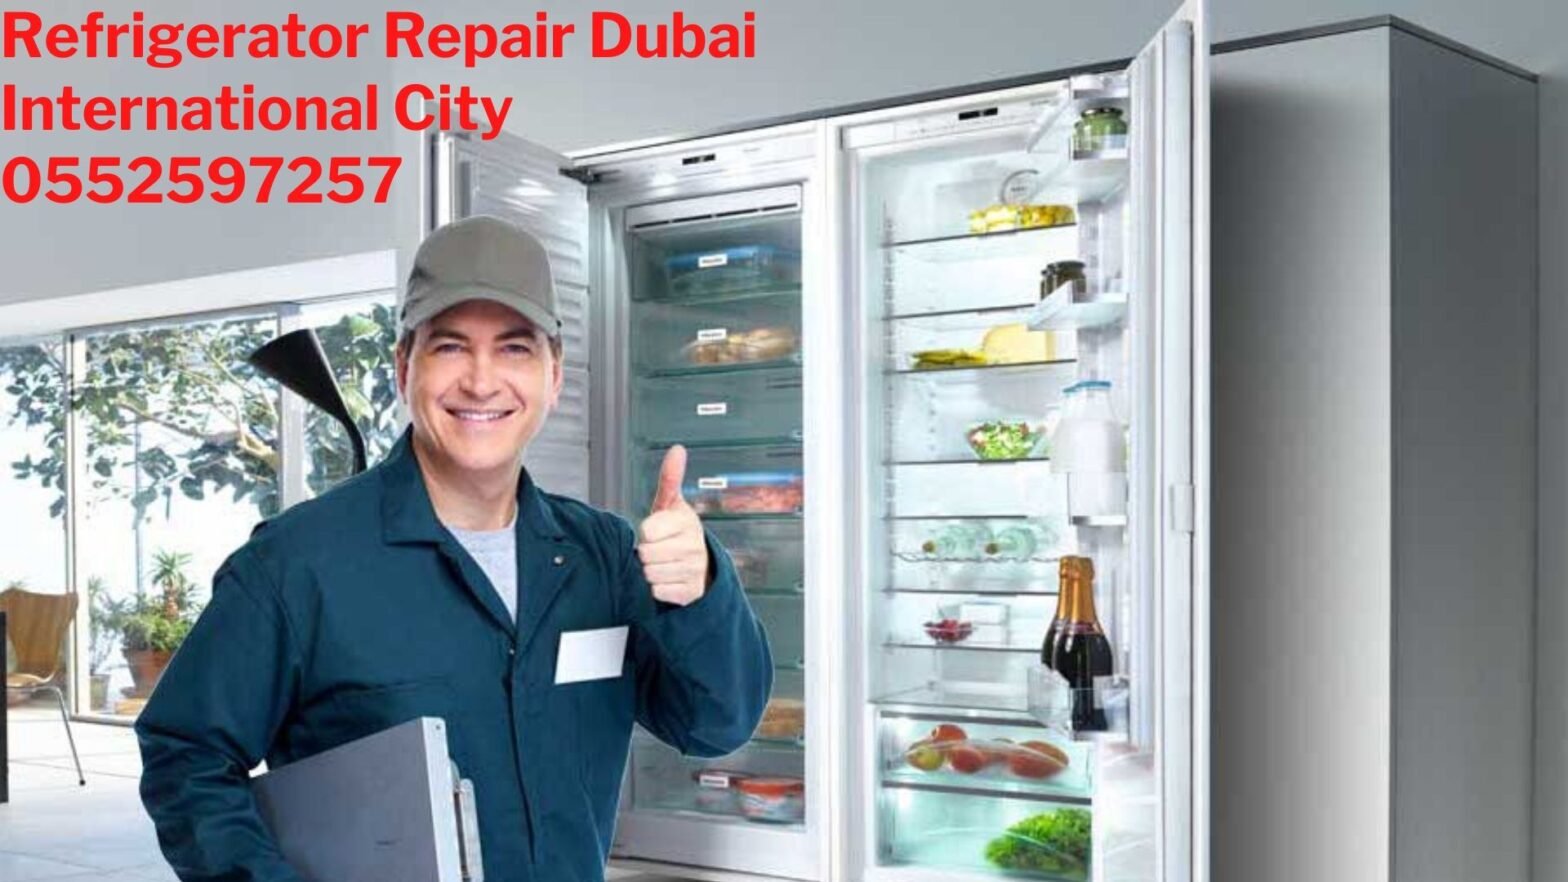 Refrigerator repair Dubai international city